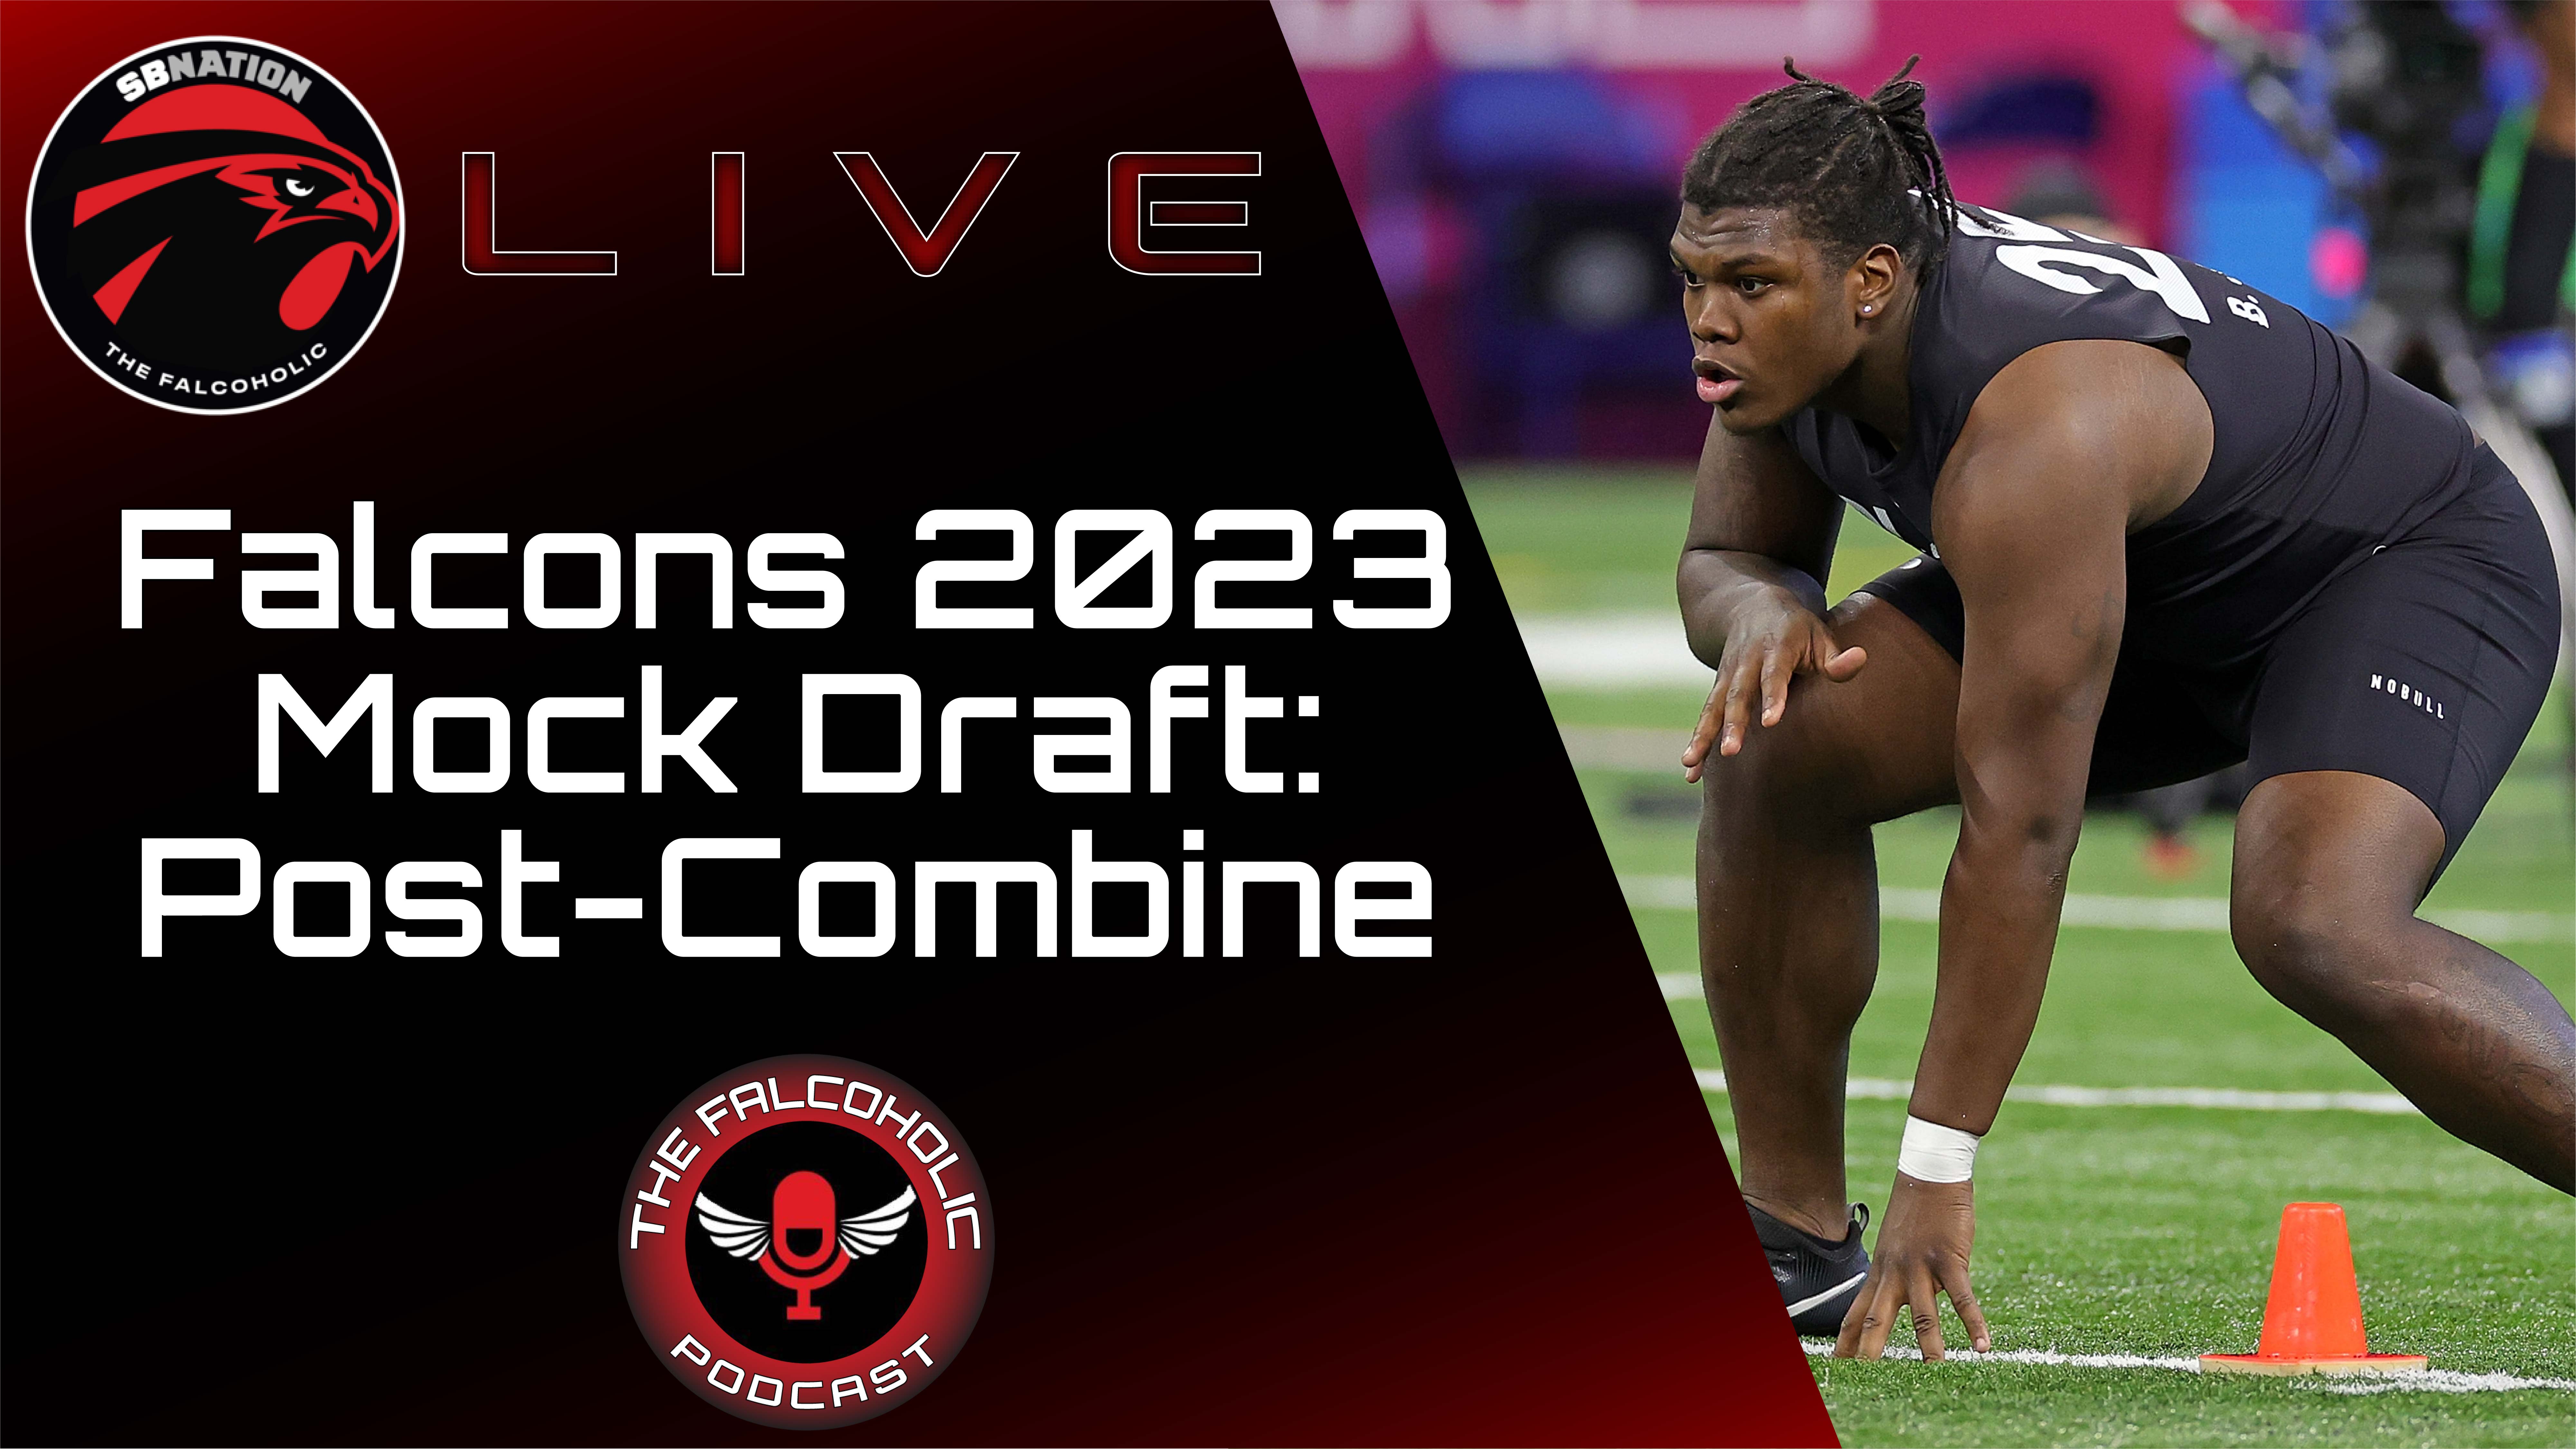 Falcons mock draft 2023: Post-Combine Edition - The Falcoholic